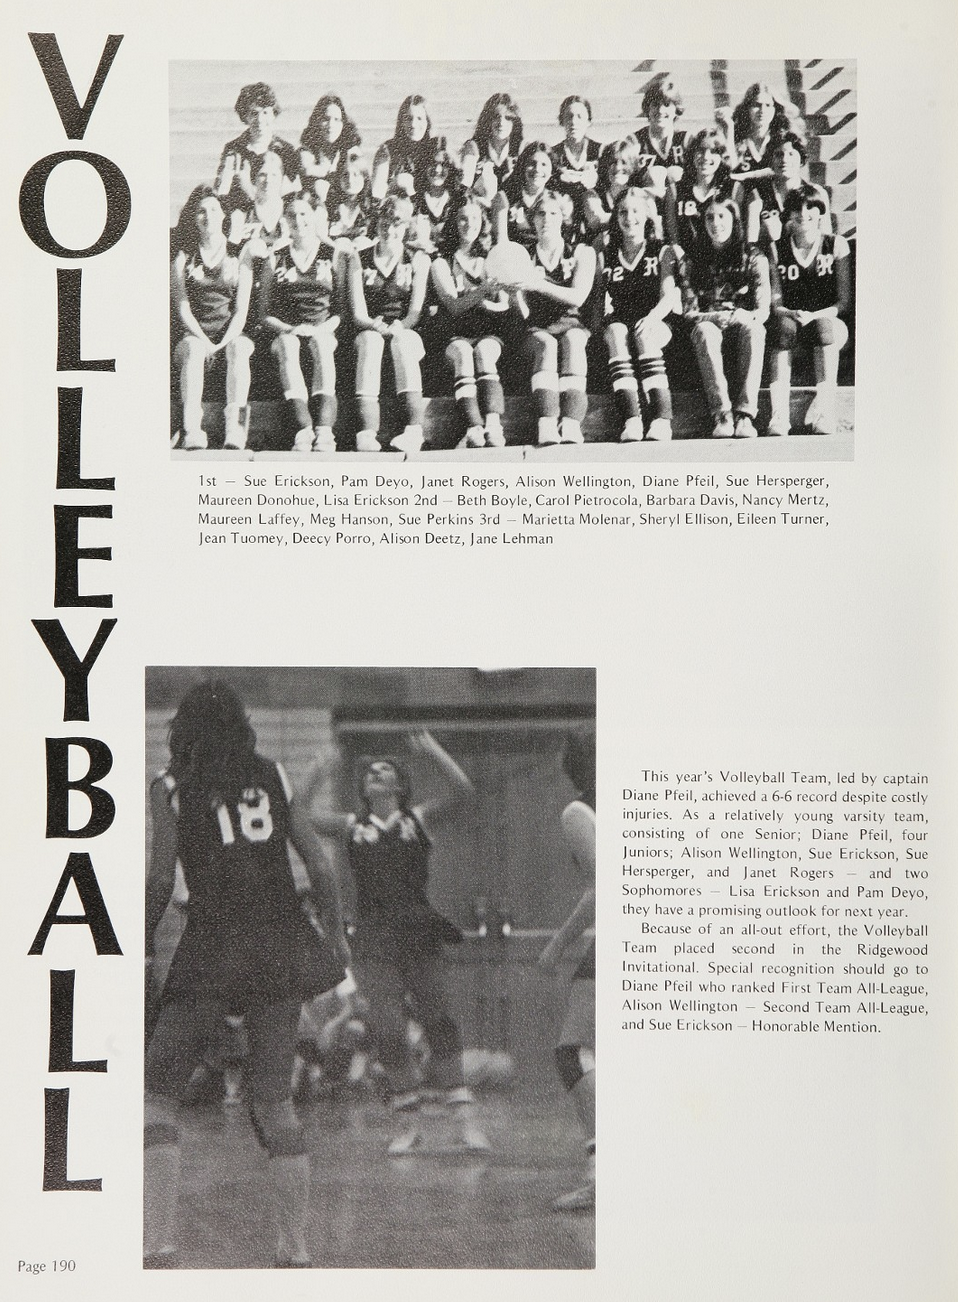 1977 Girls’ Volleyball Team